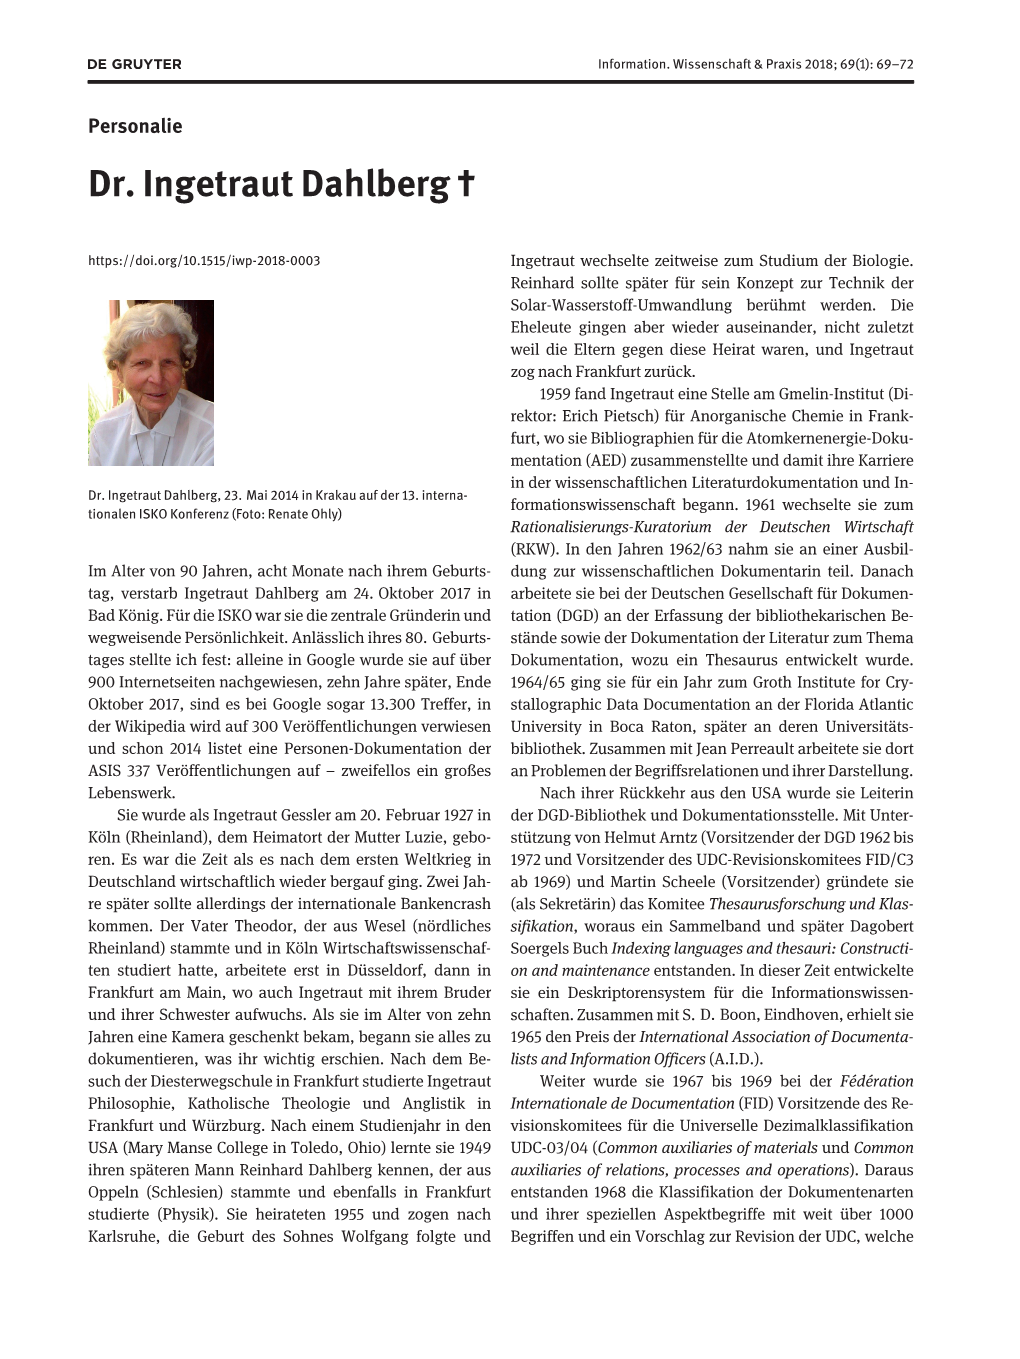 Dr. Ingetraut Dahlberg †